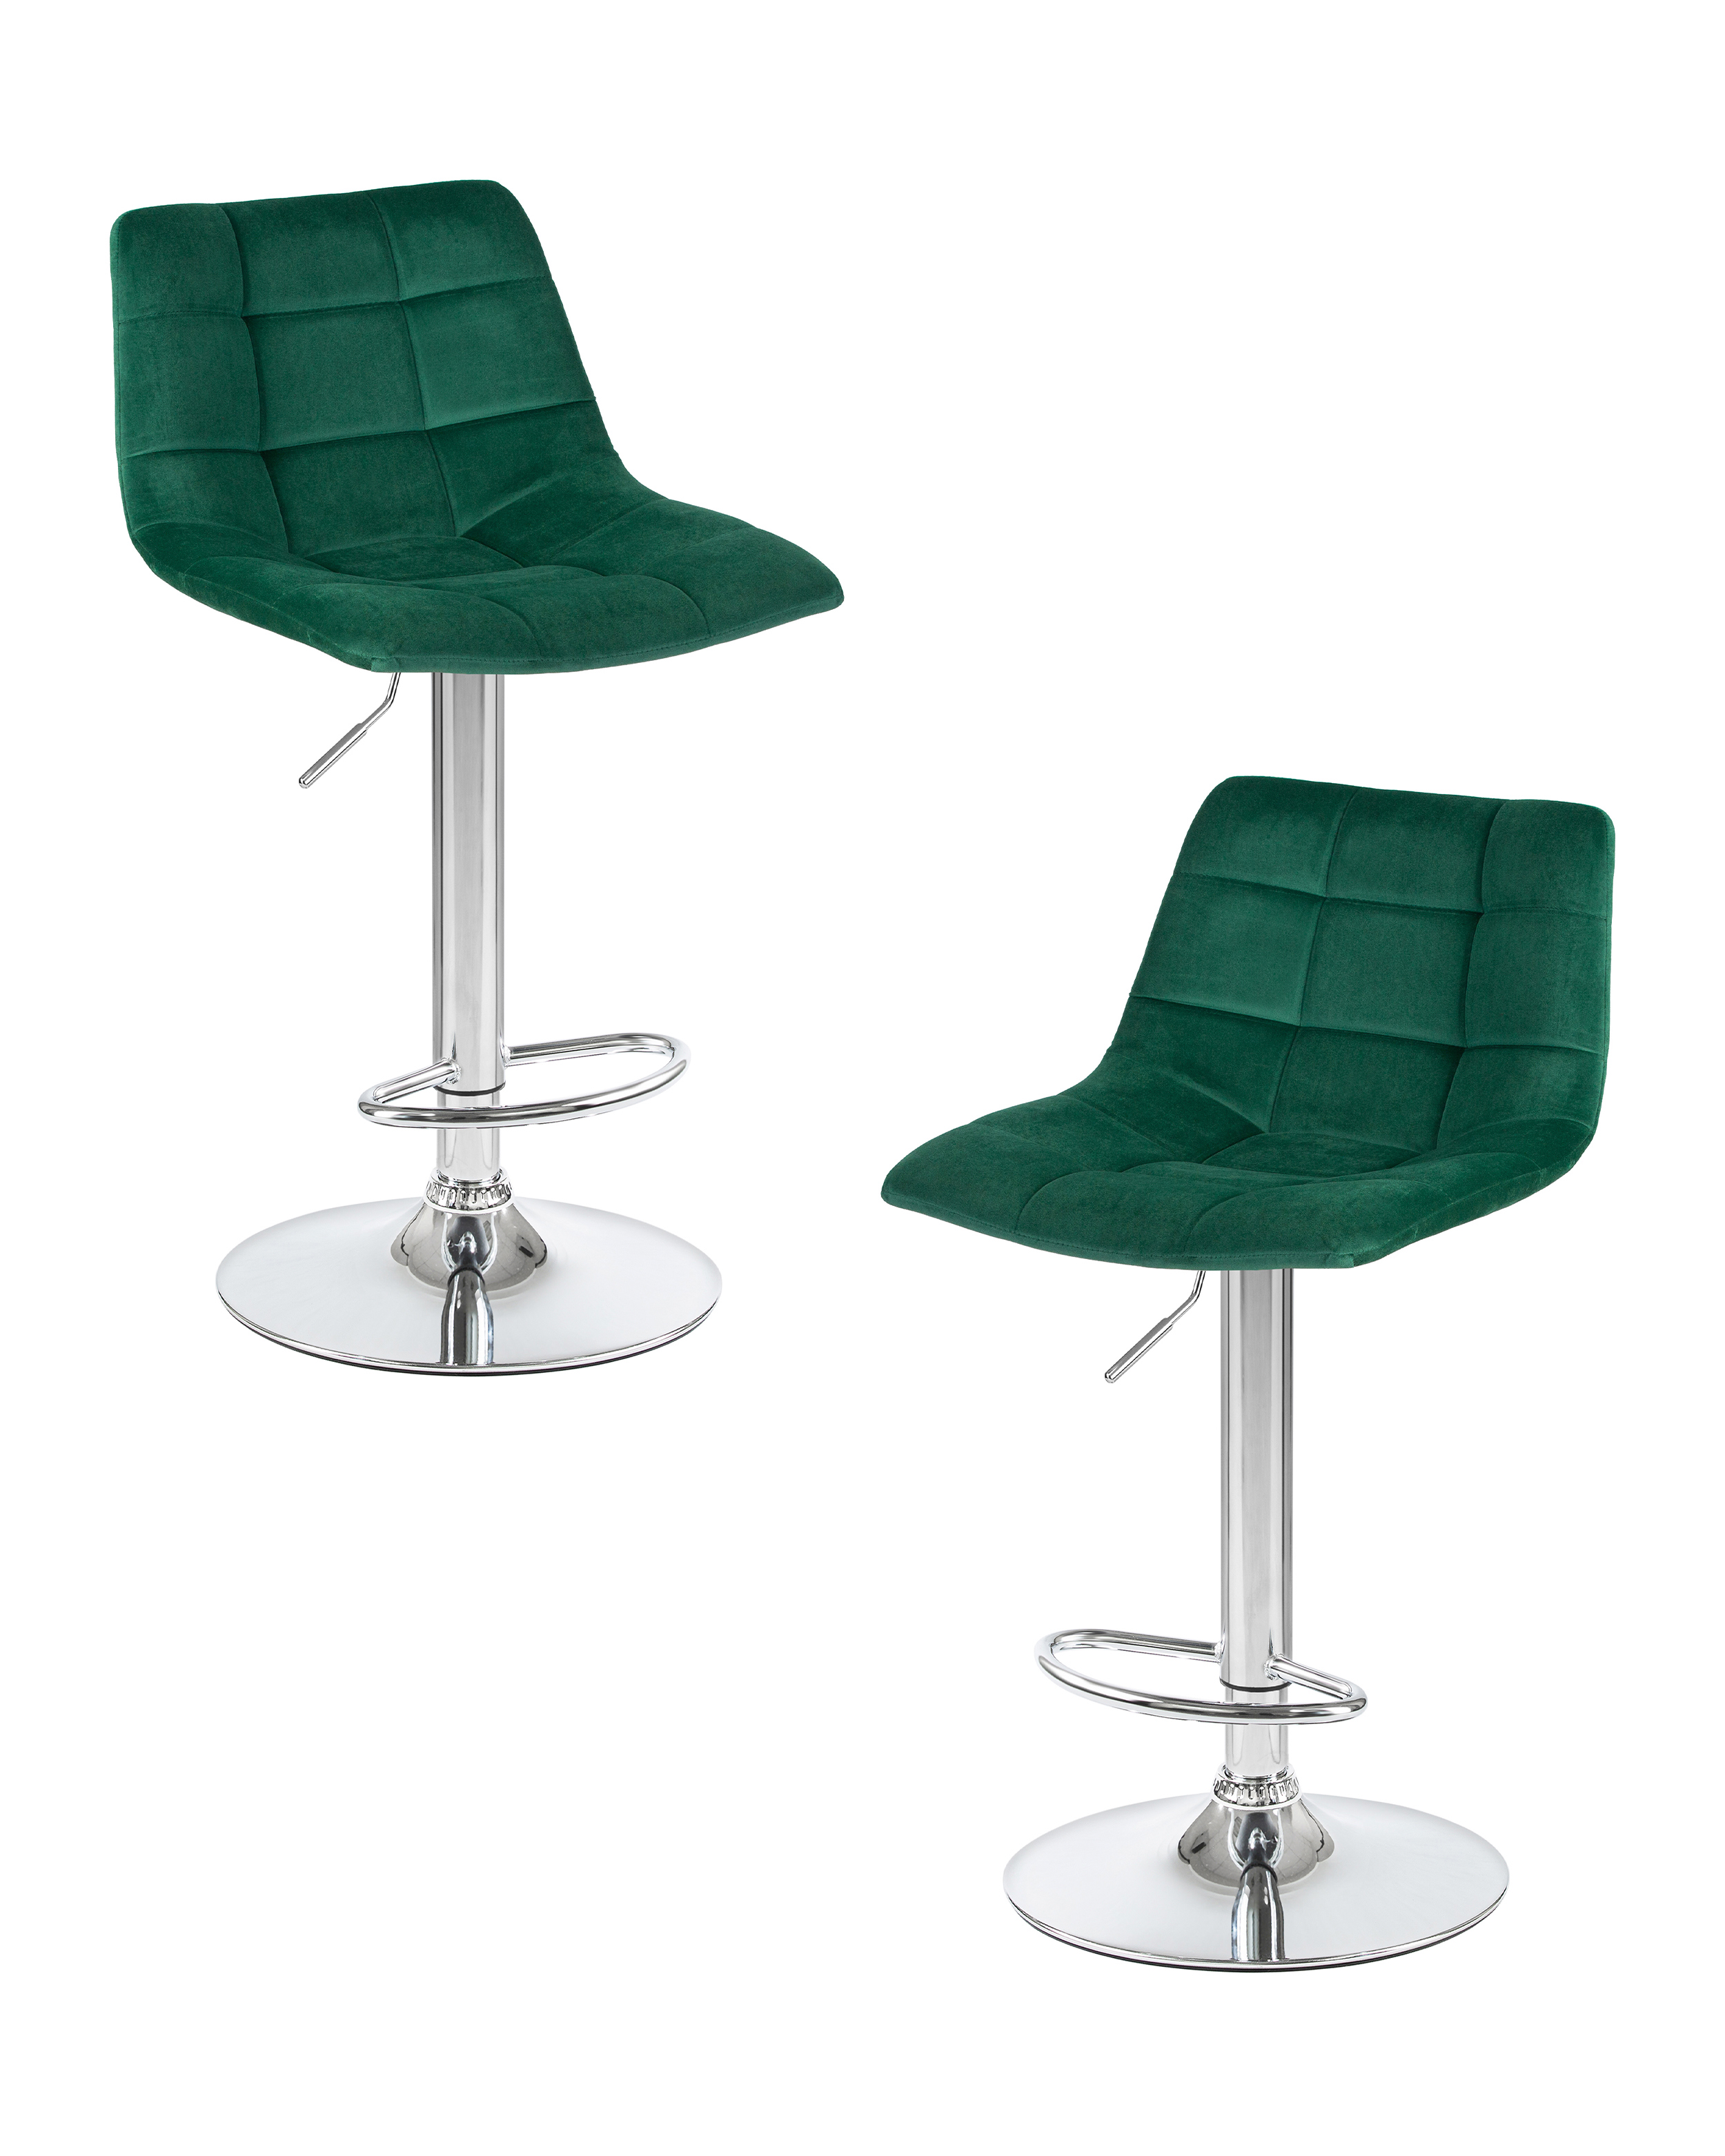 90559201 Барный стул Tailor lm-5017 47x113x49 цвет зеленый 2 шт STLM-0282003 DOBRIN